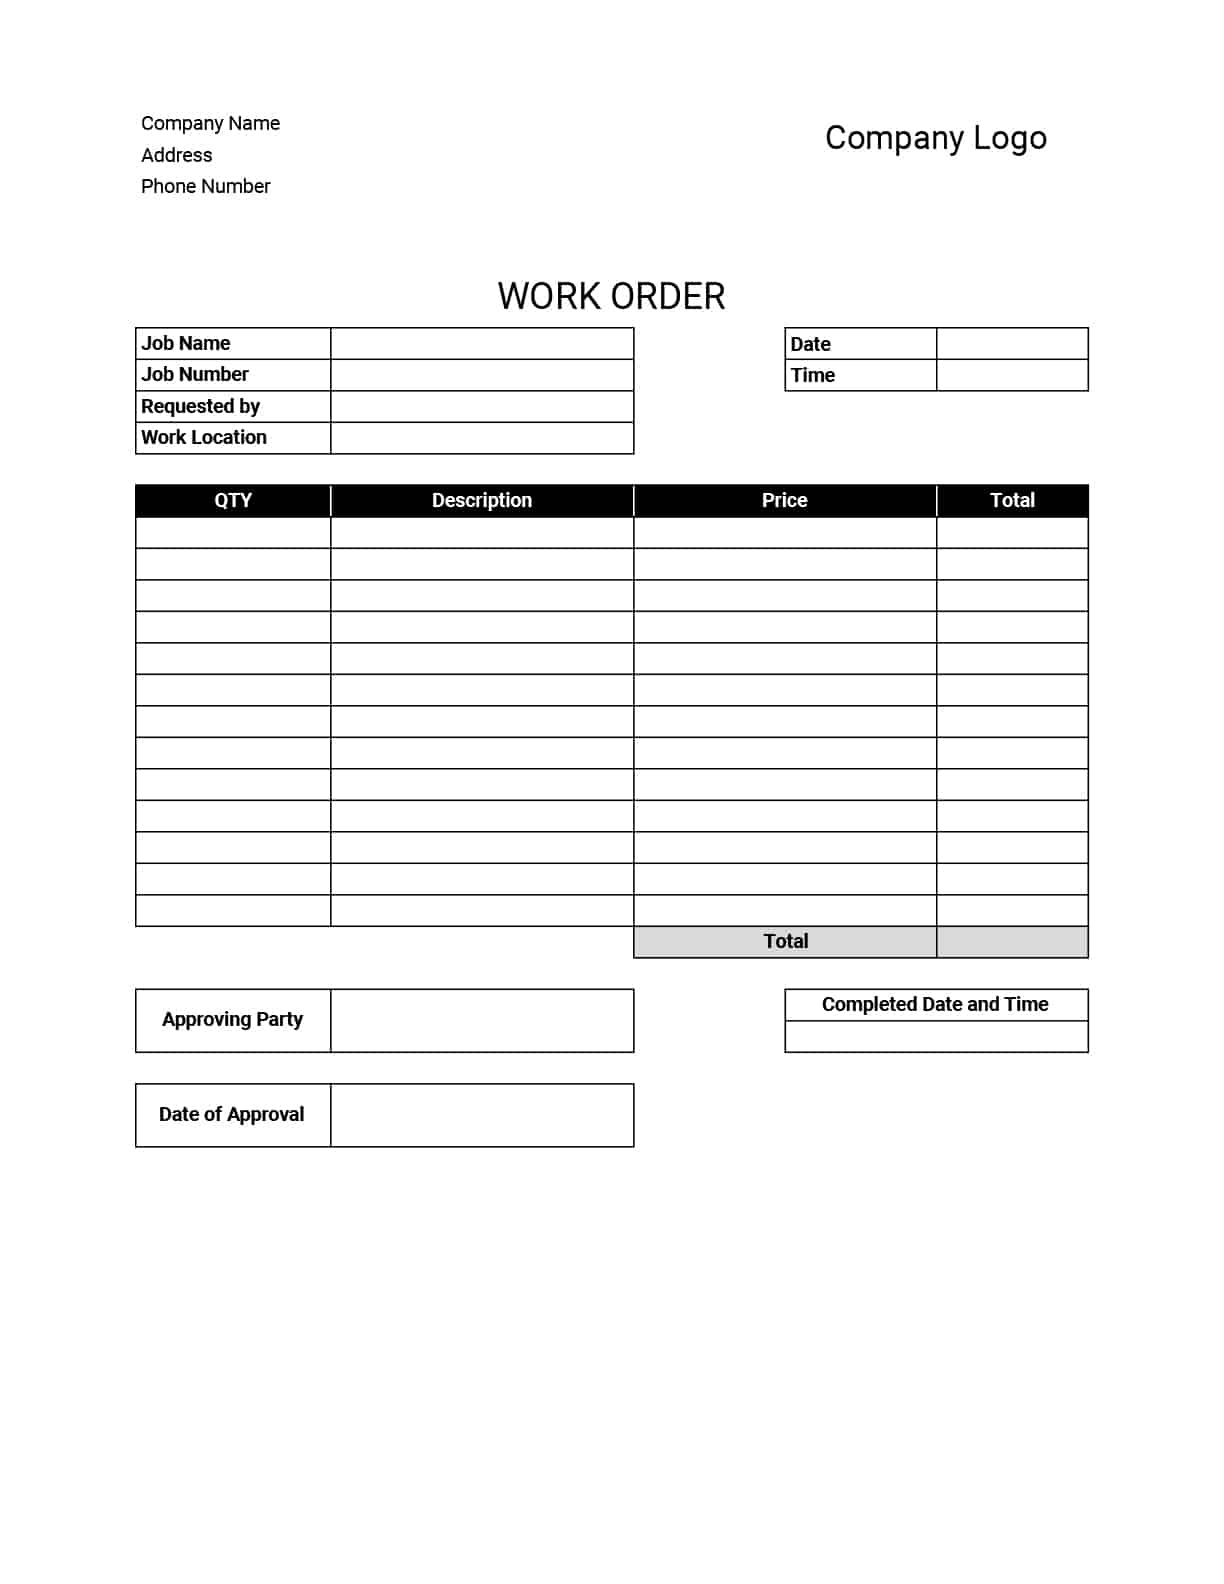 Work Order Form Template Excel